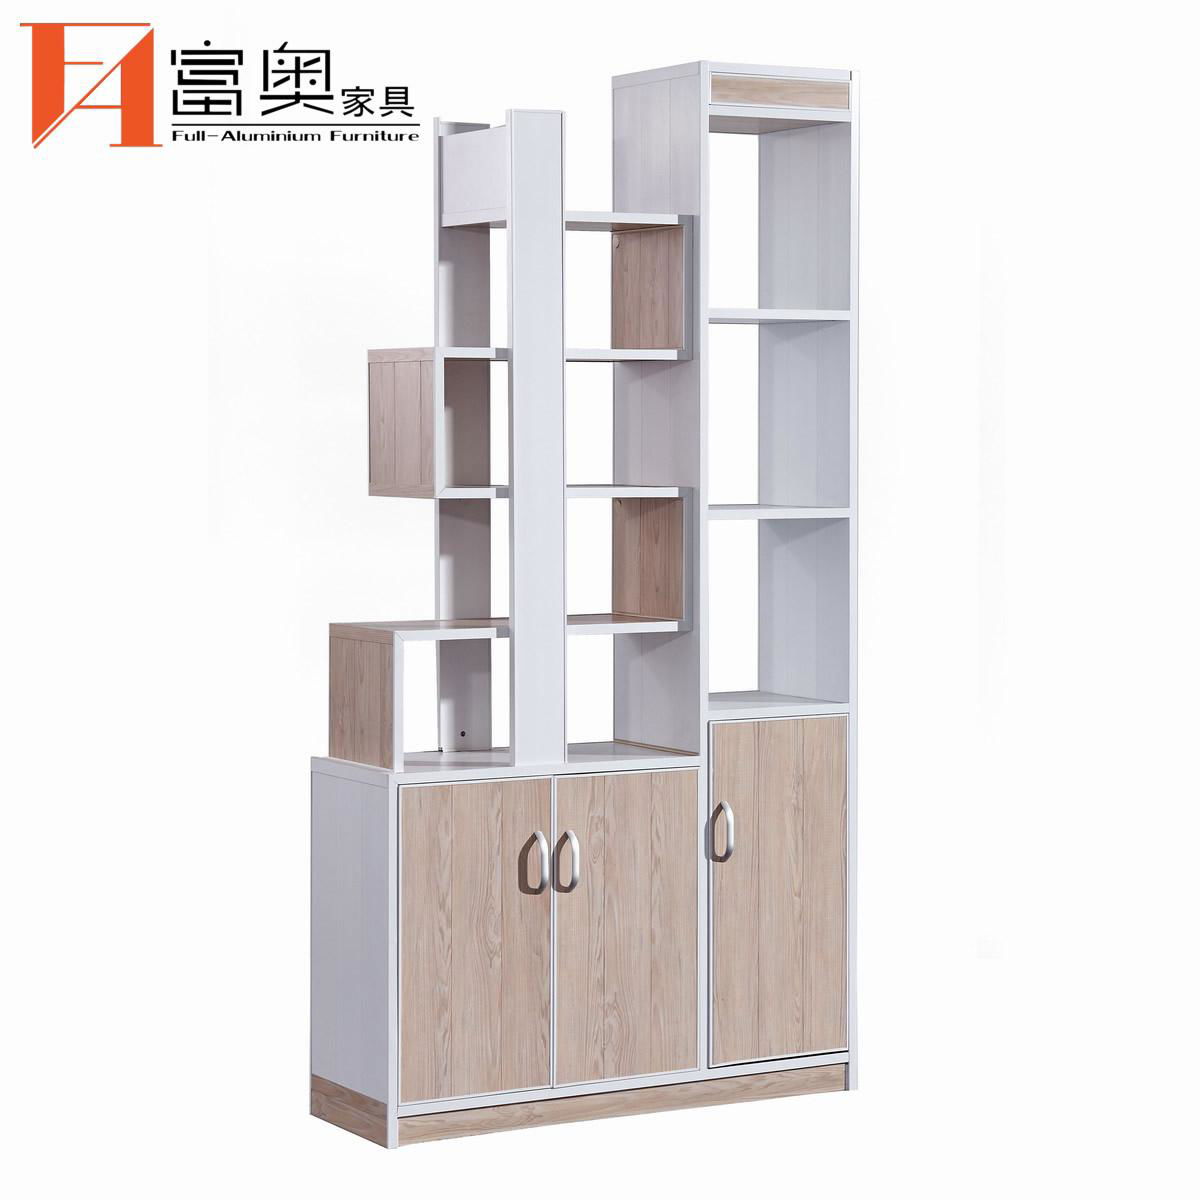 All Aluminum Living Room Furniture Divider Cabinet 4